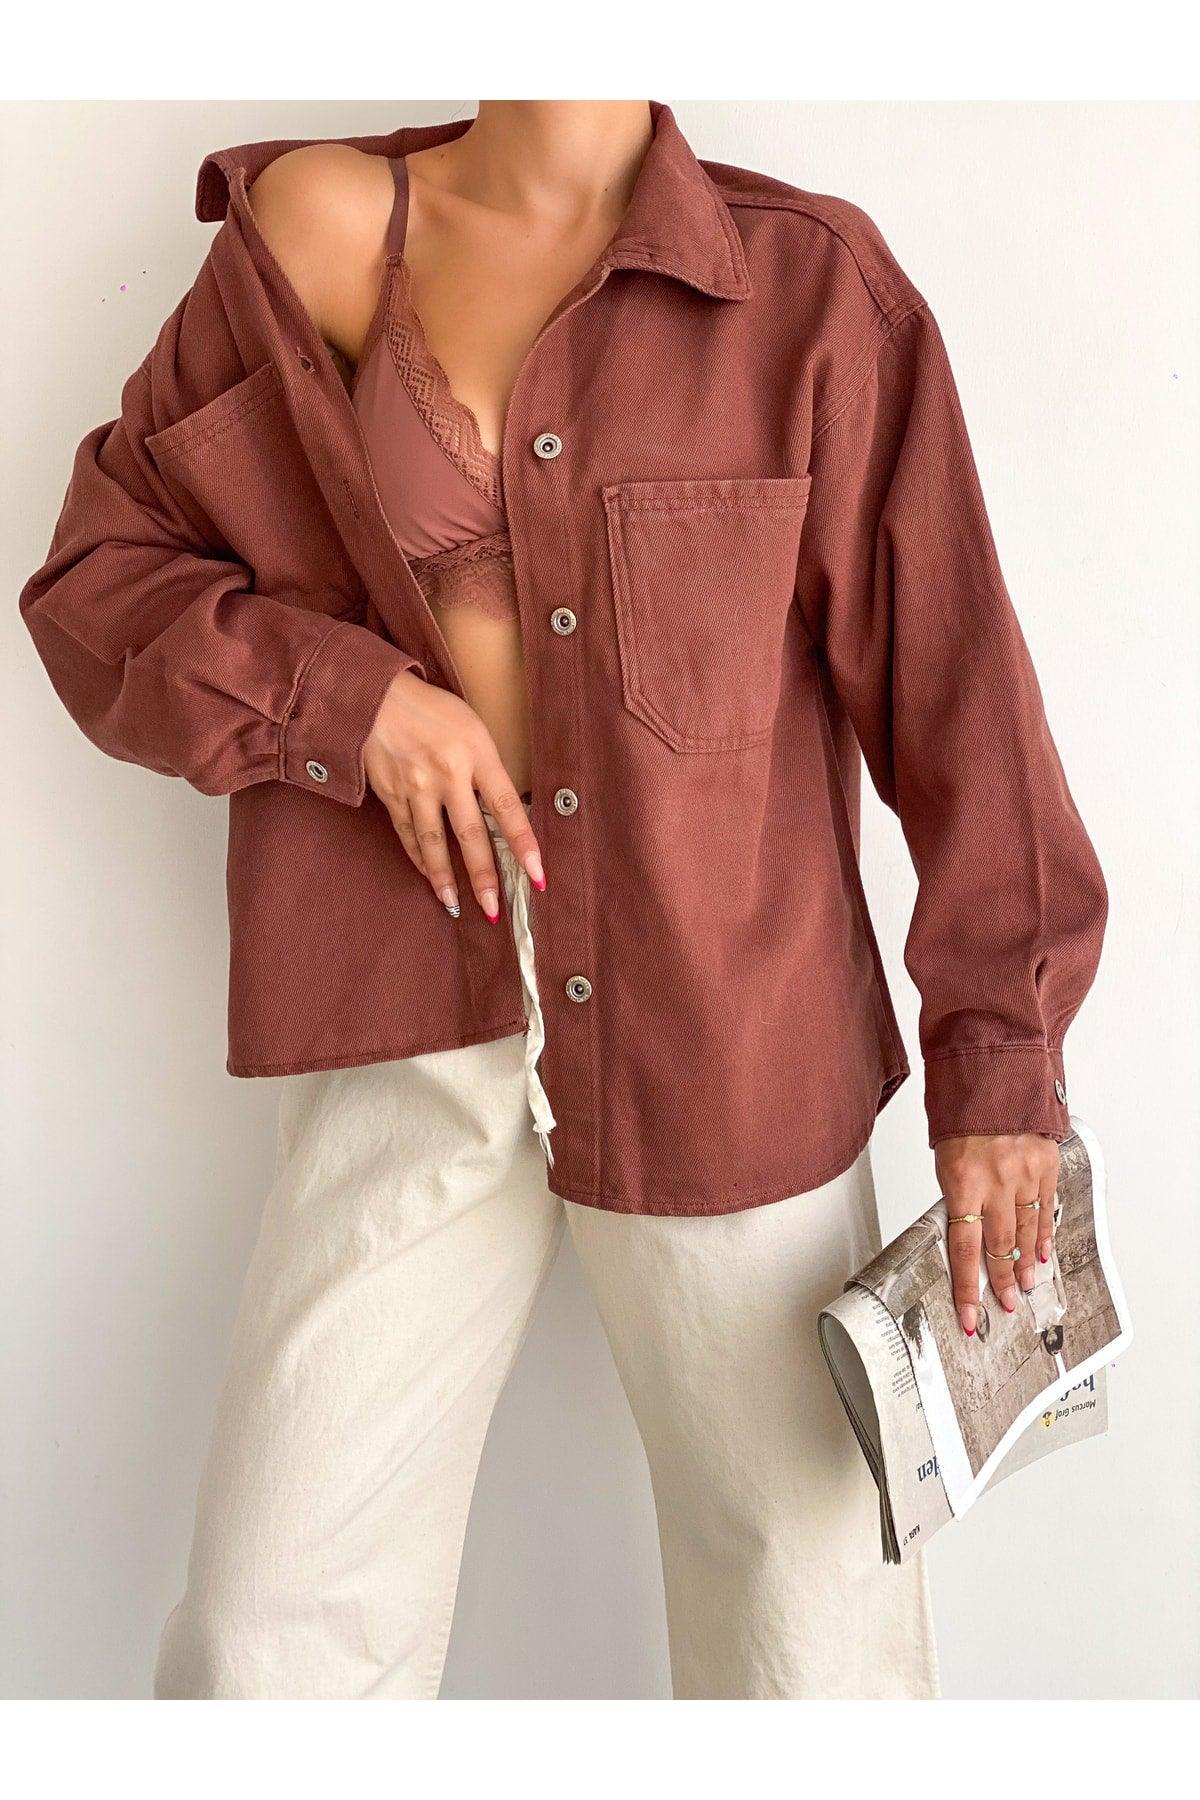 Women's Oversize Long Sleeve Double Pocket Jacket Shirt Brown - Swordslife